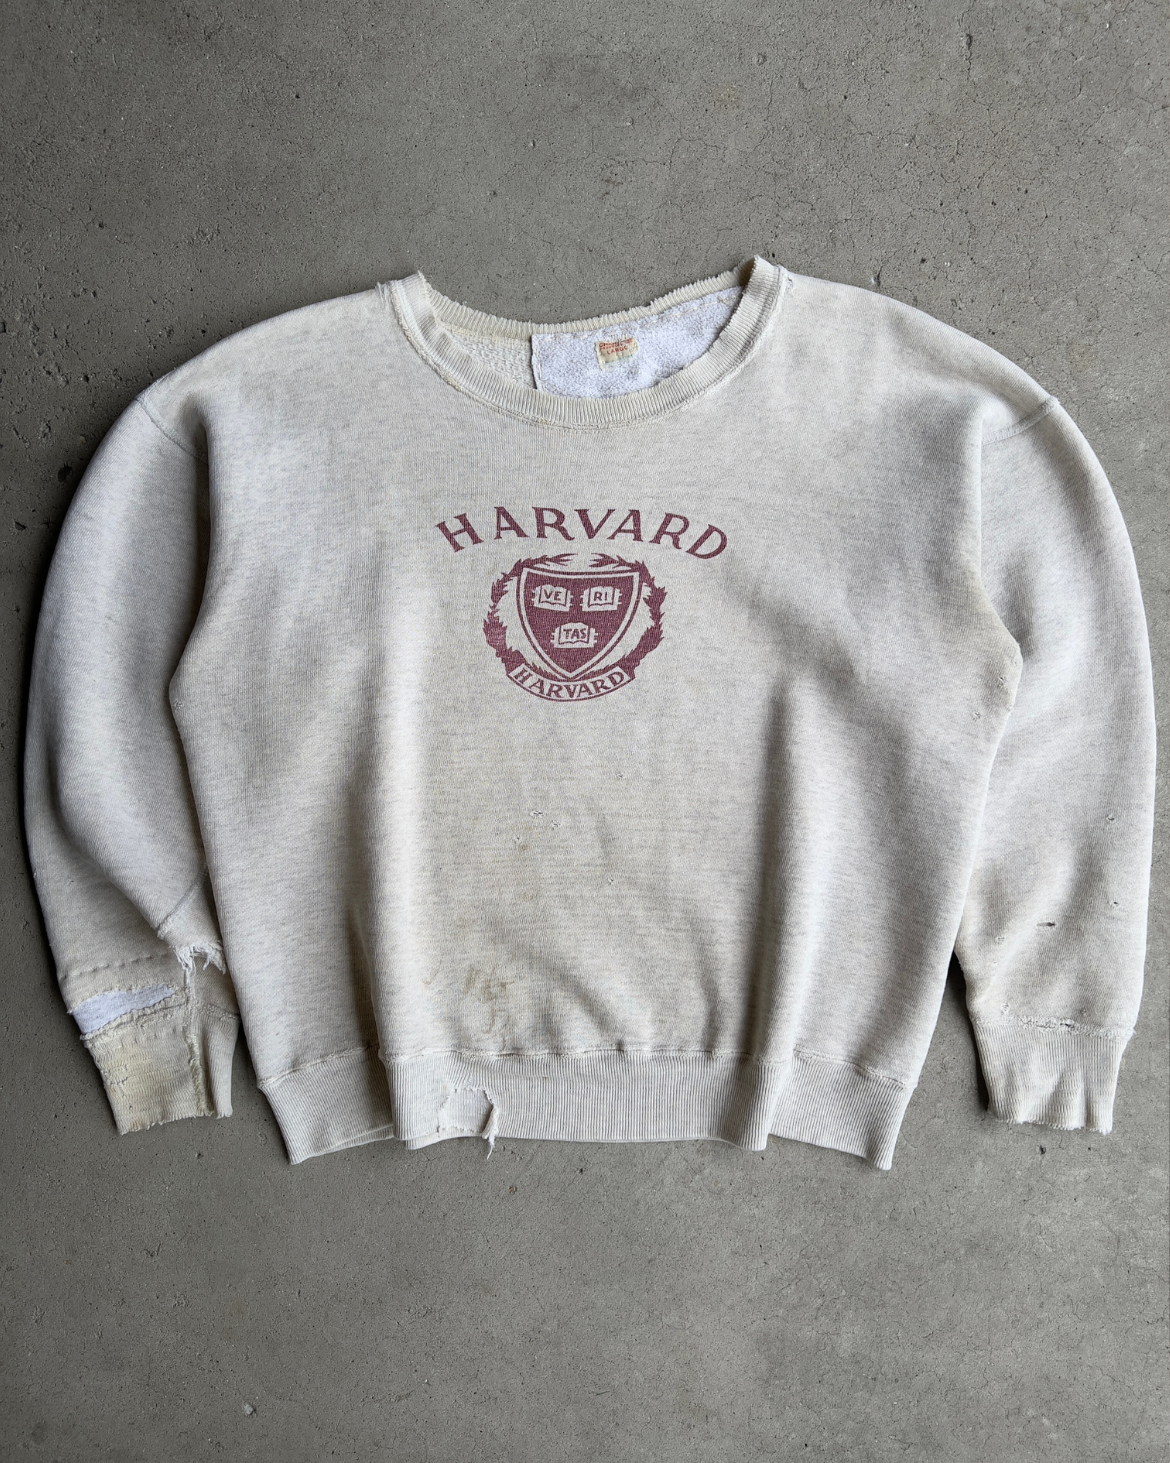 Vintage Harvard Shield Sweatshirt 